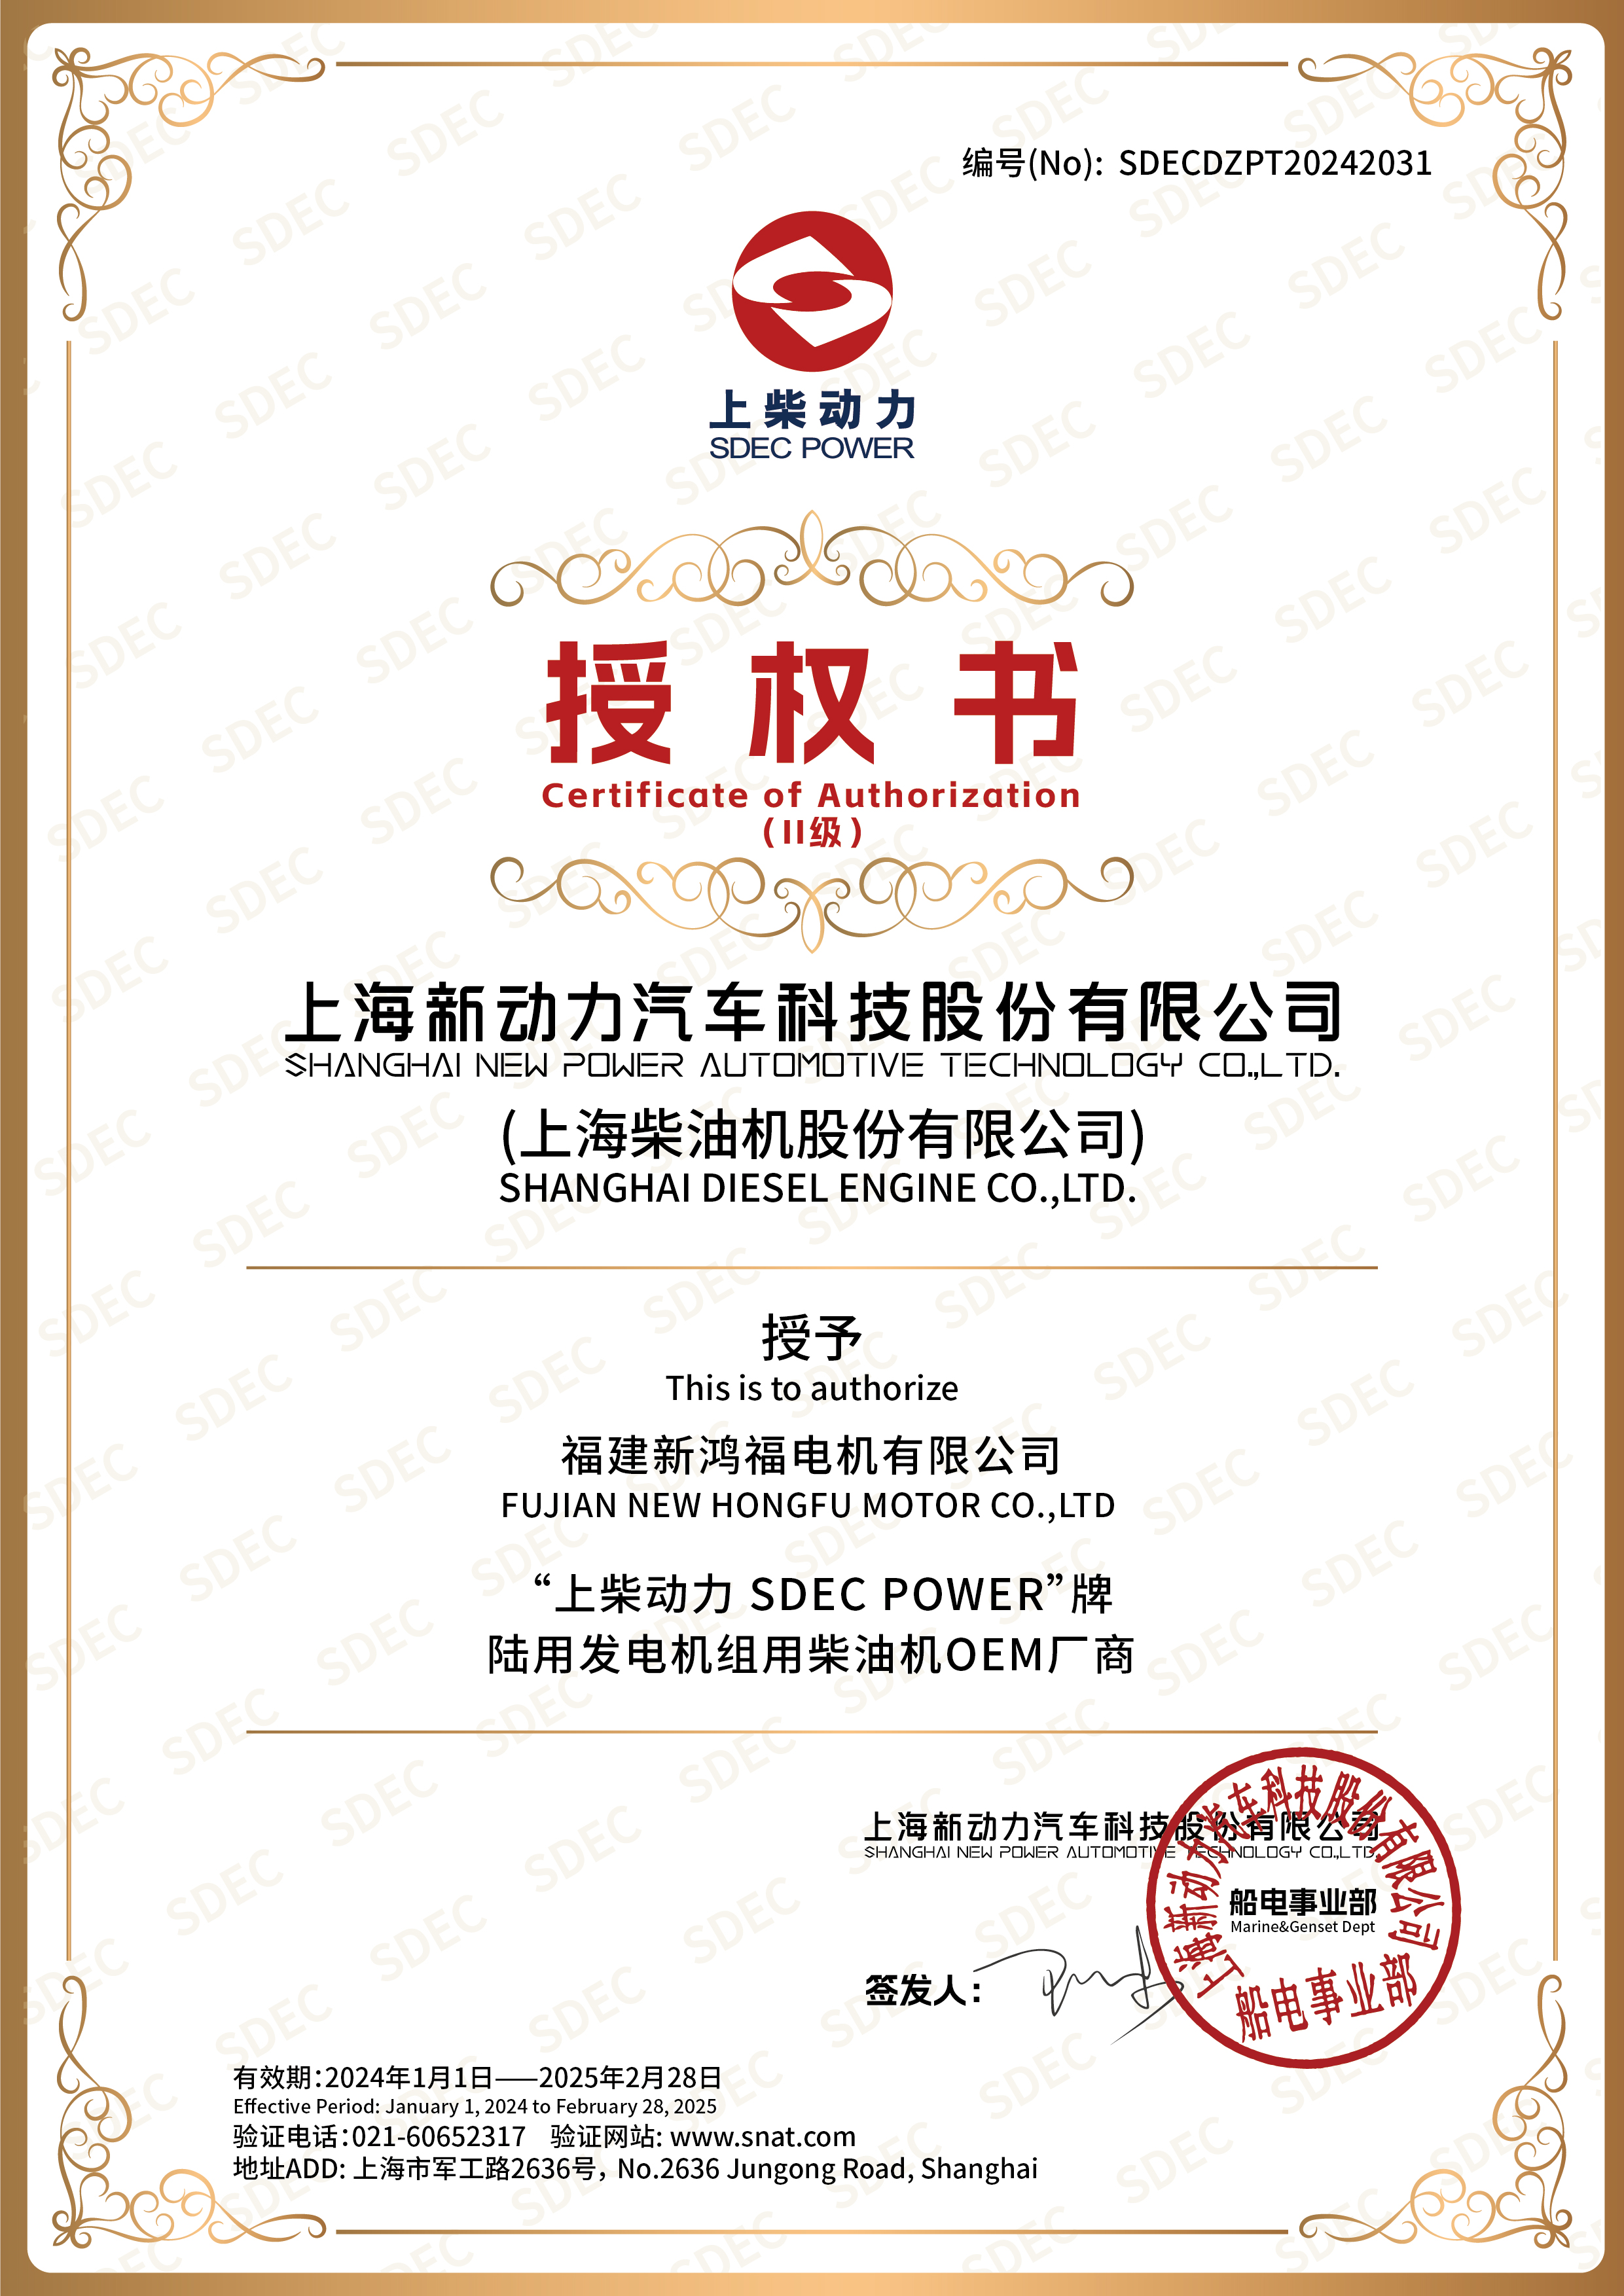 新鸿福 SDEC OEM 证书